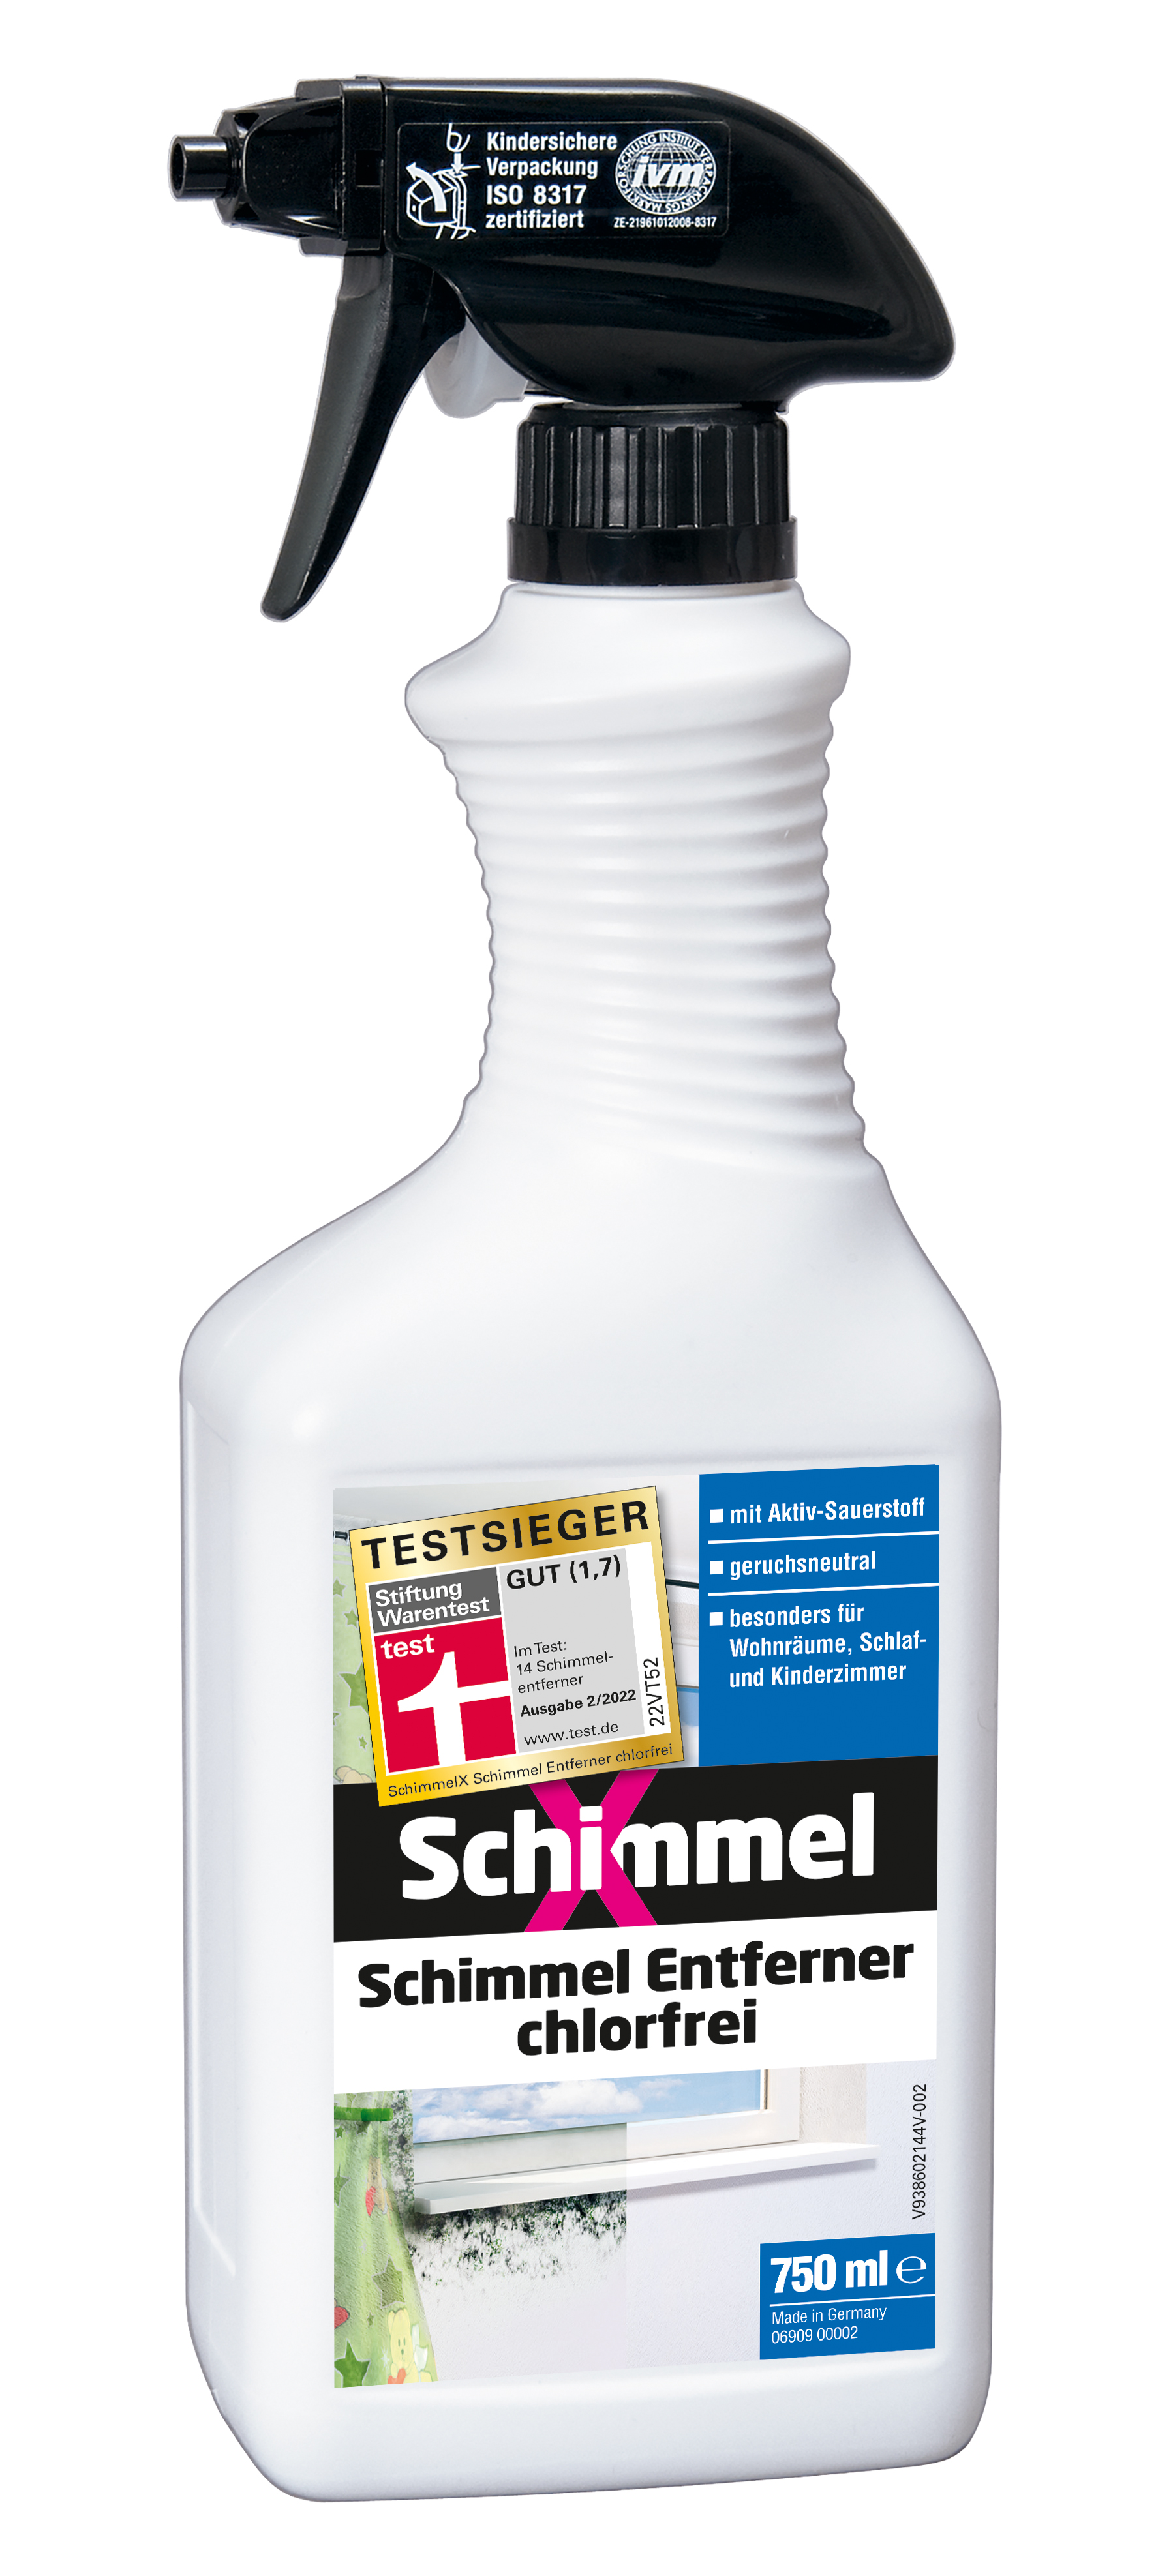 SchimmelX Schimmel Entferner, chlorfrei